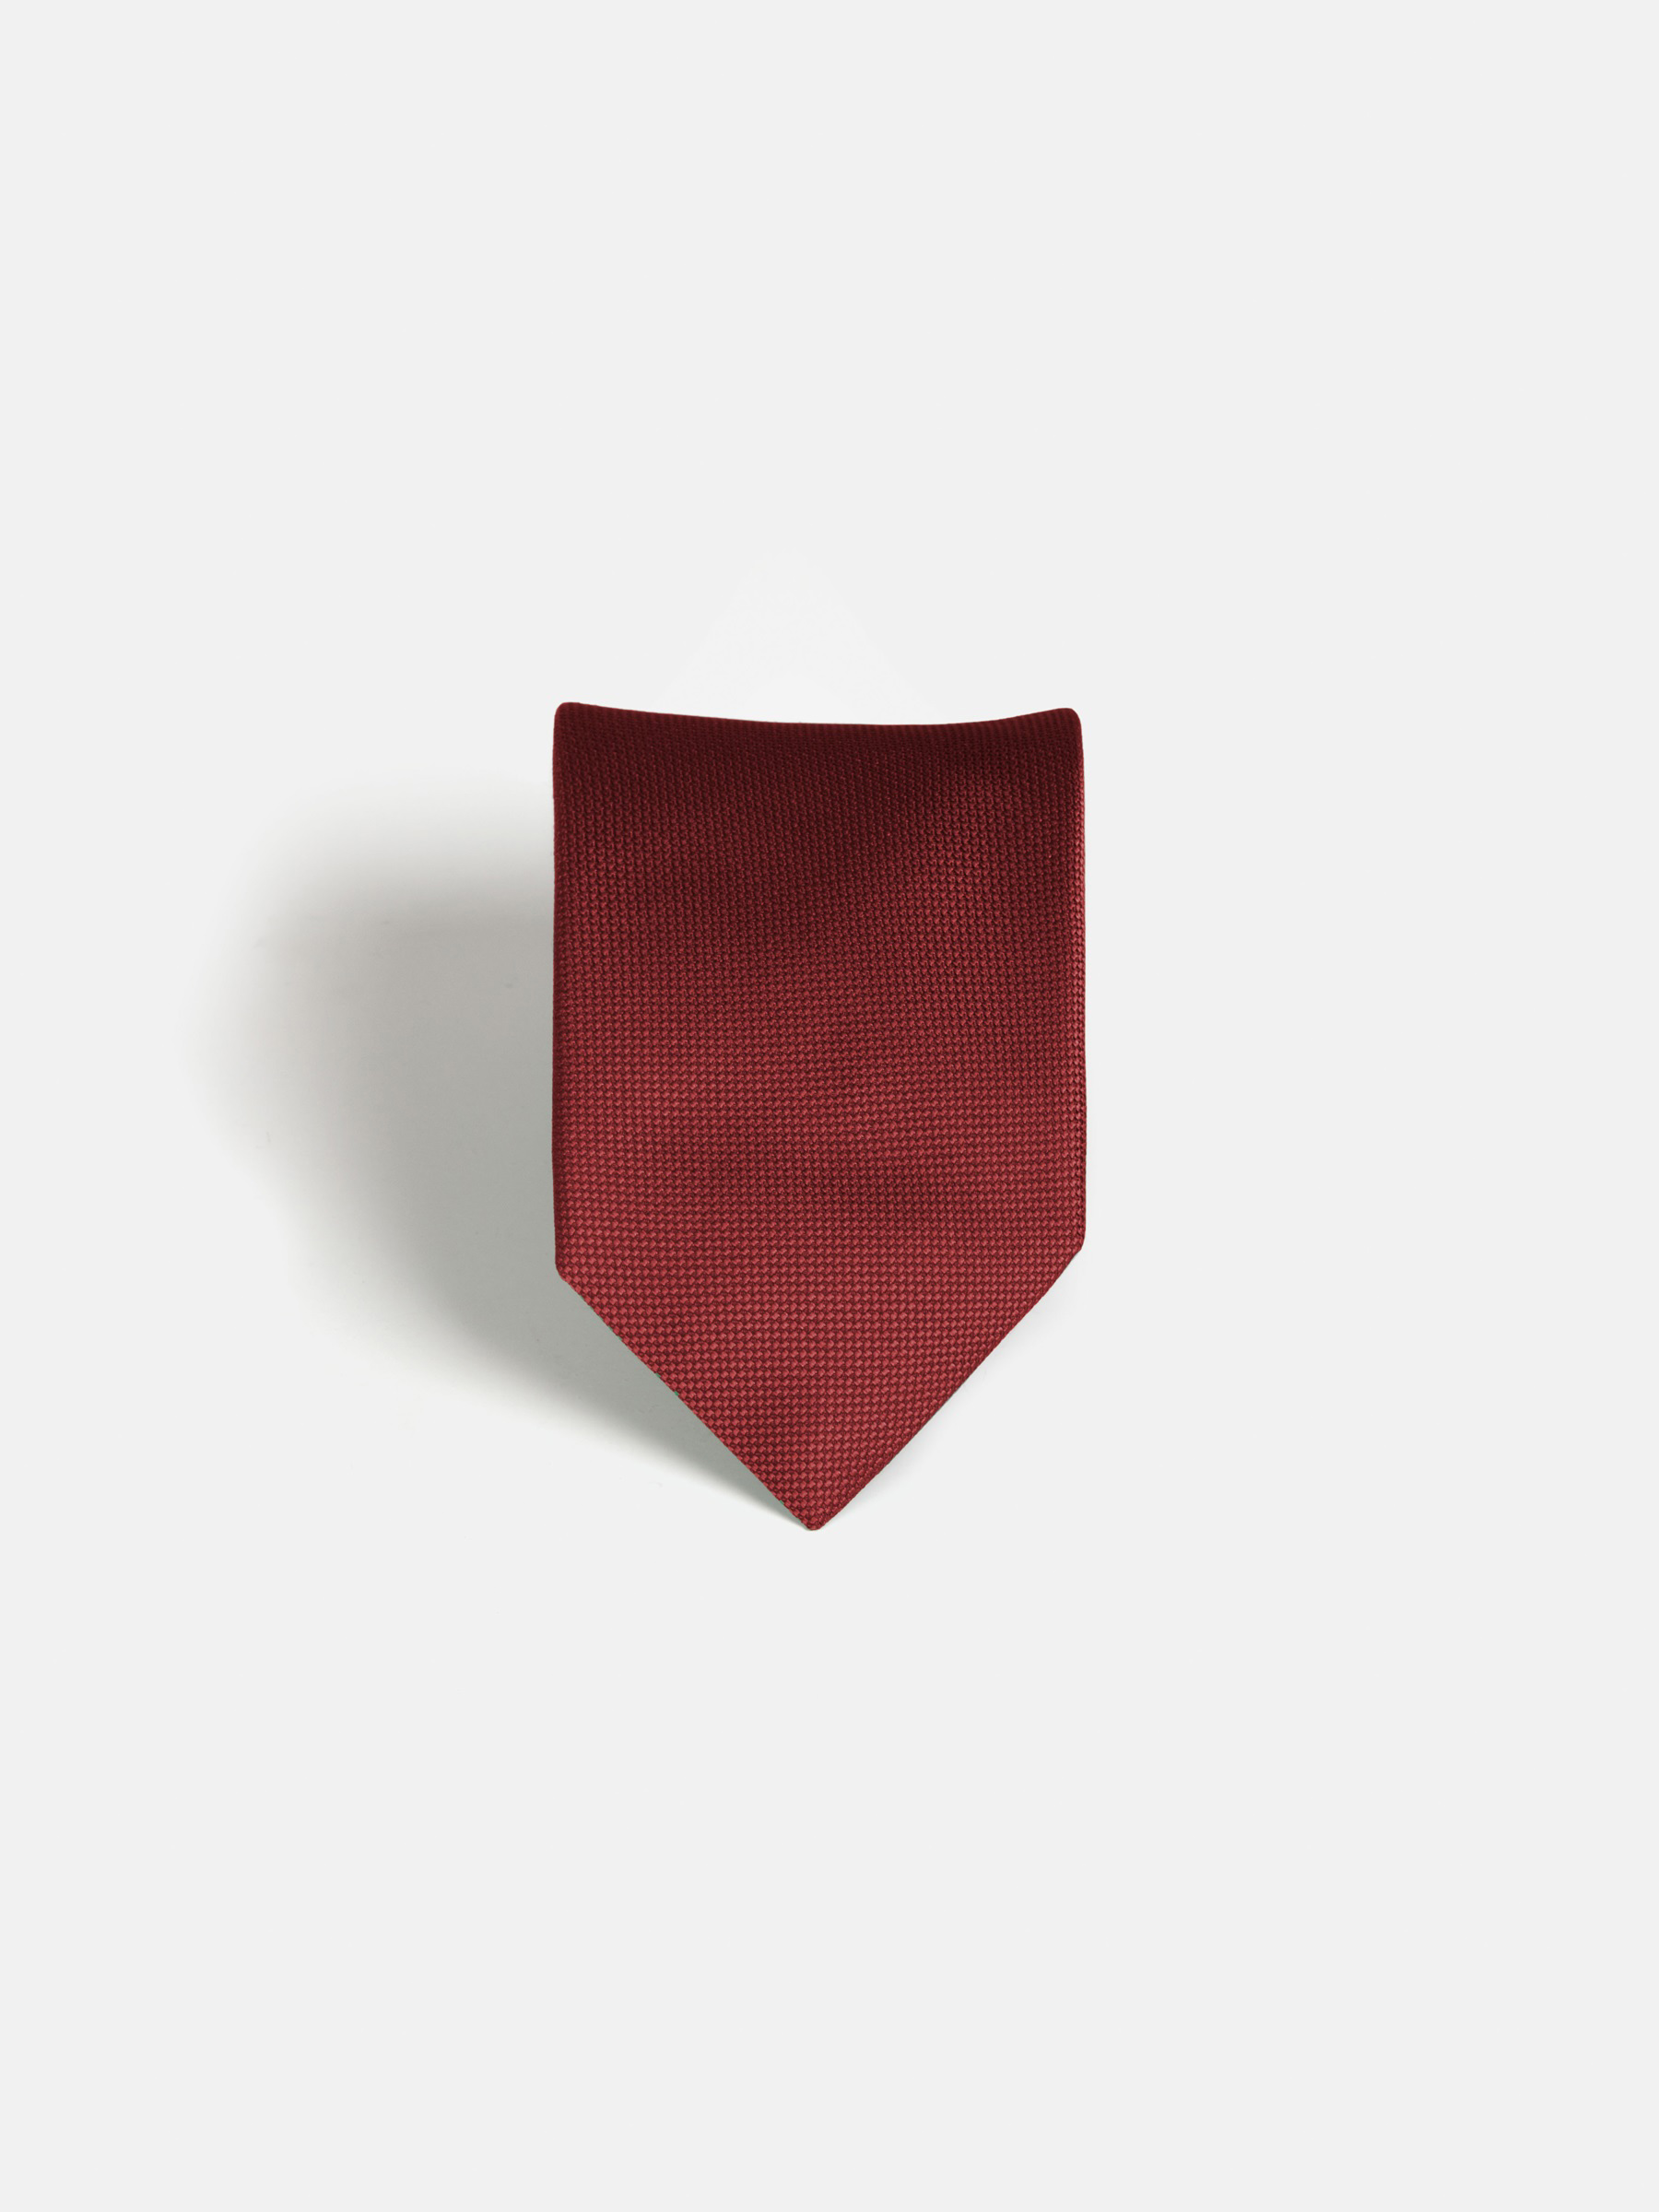 Zavier Red Tie